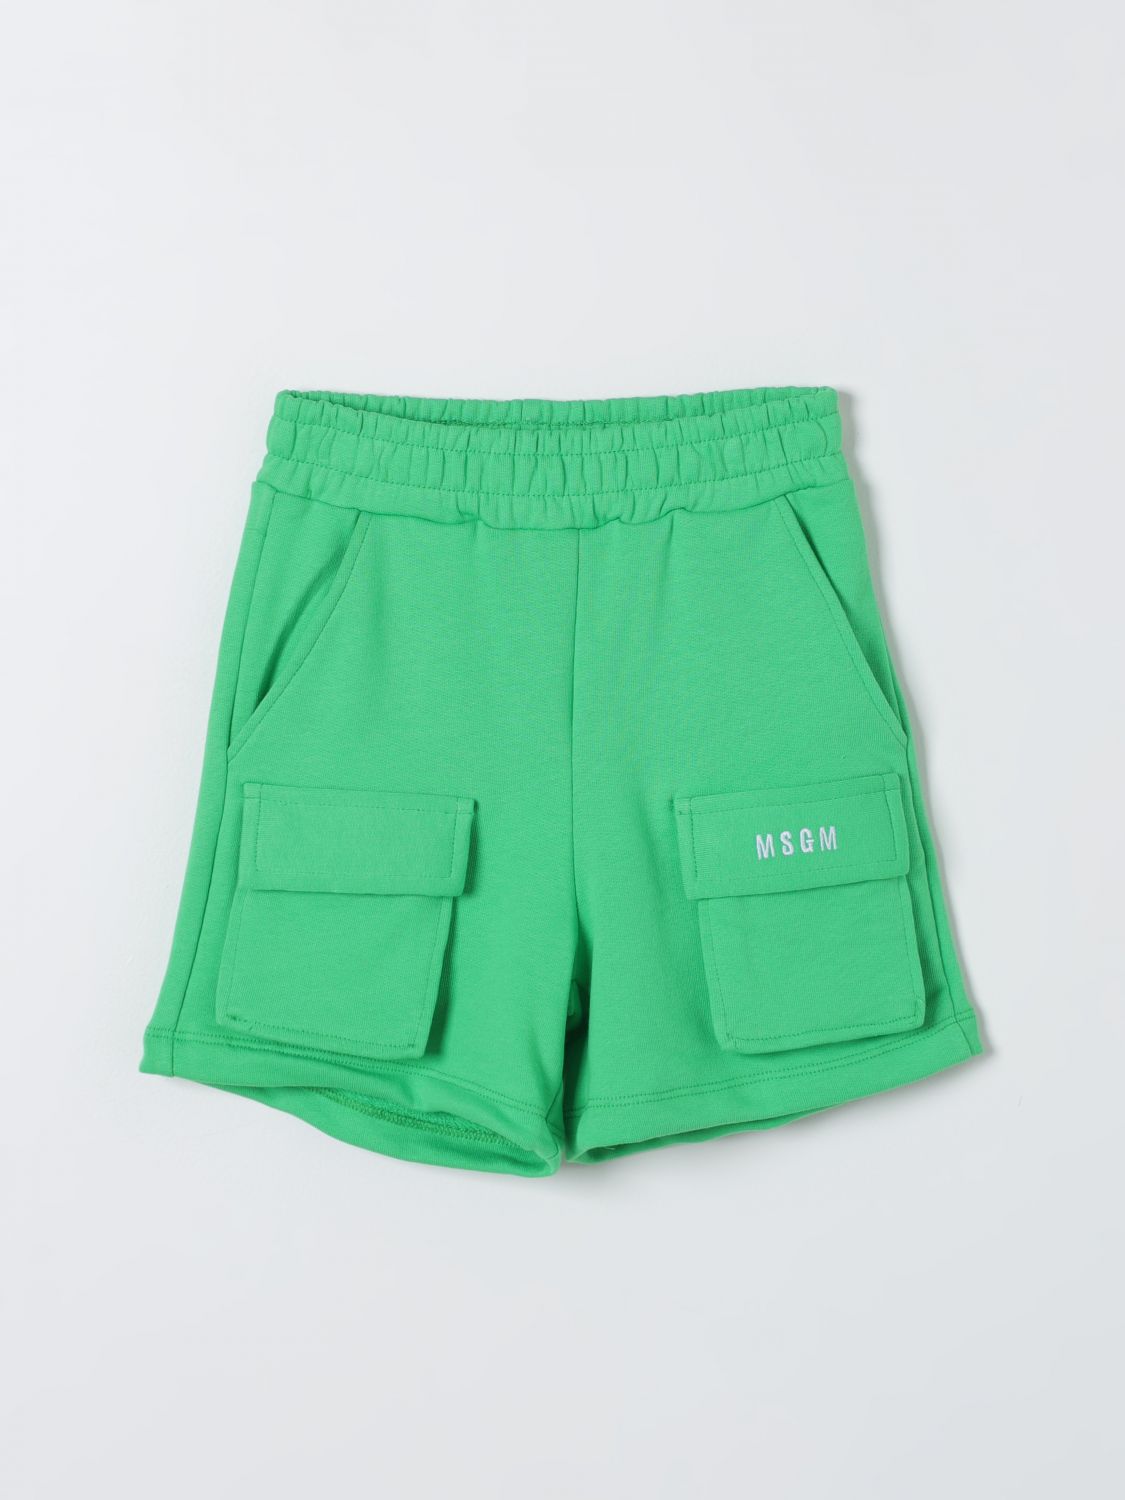 Msgm Babies' Shorts  Kids Kids Color Green